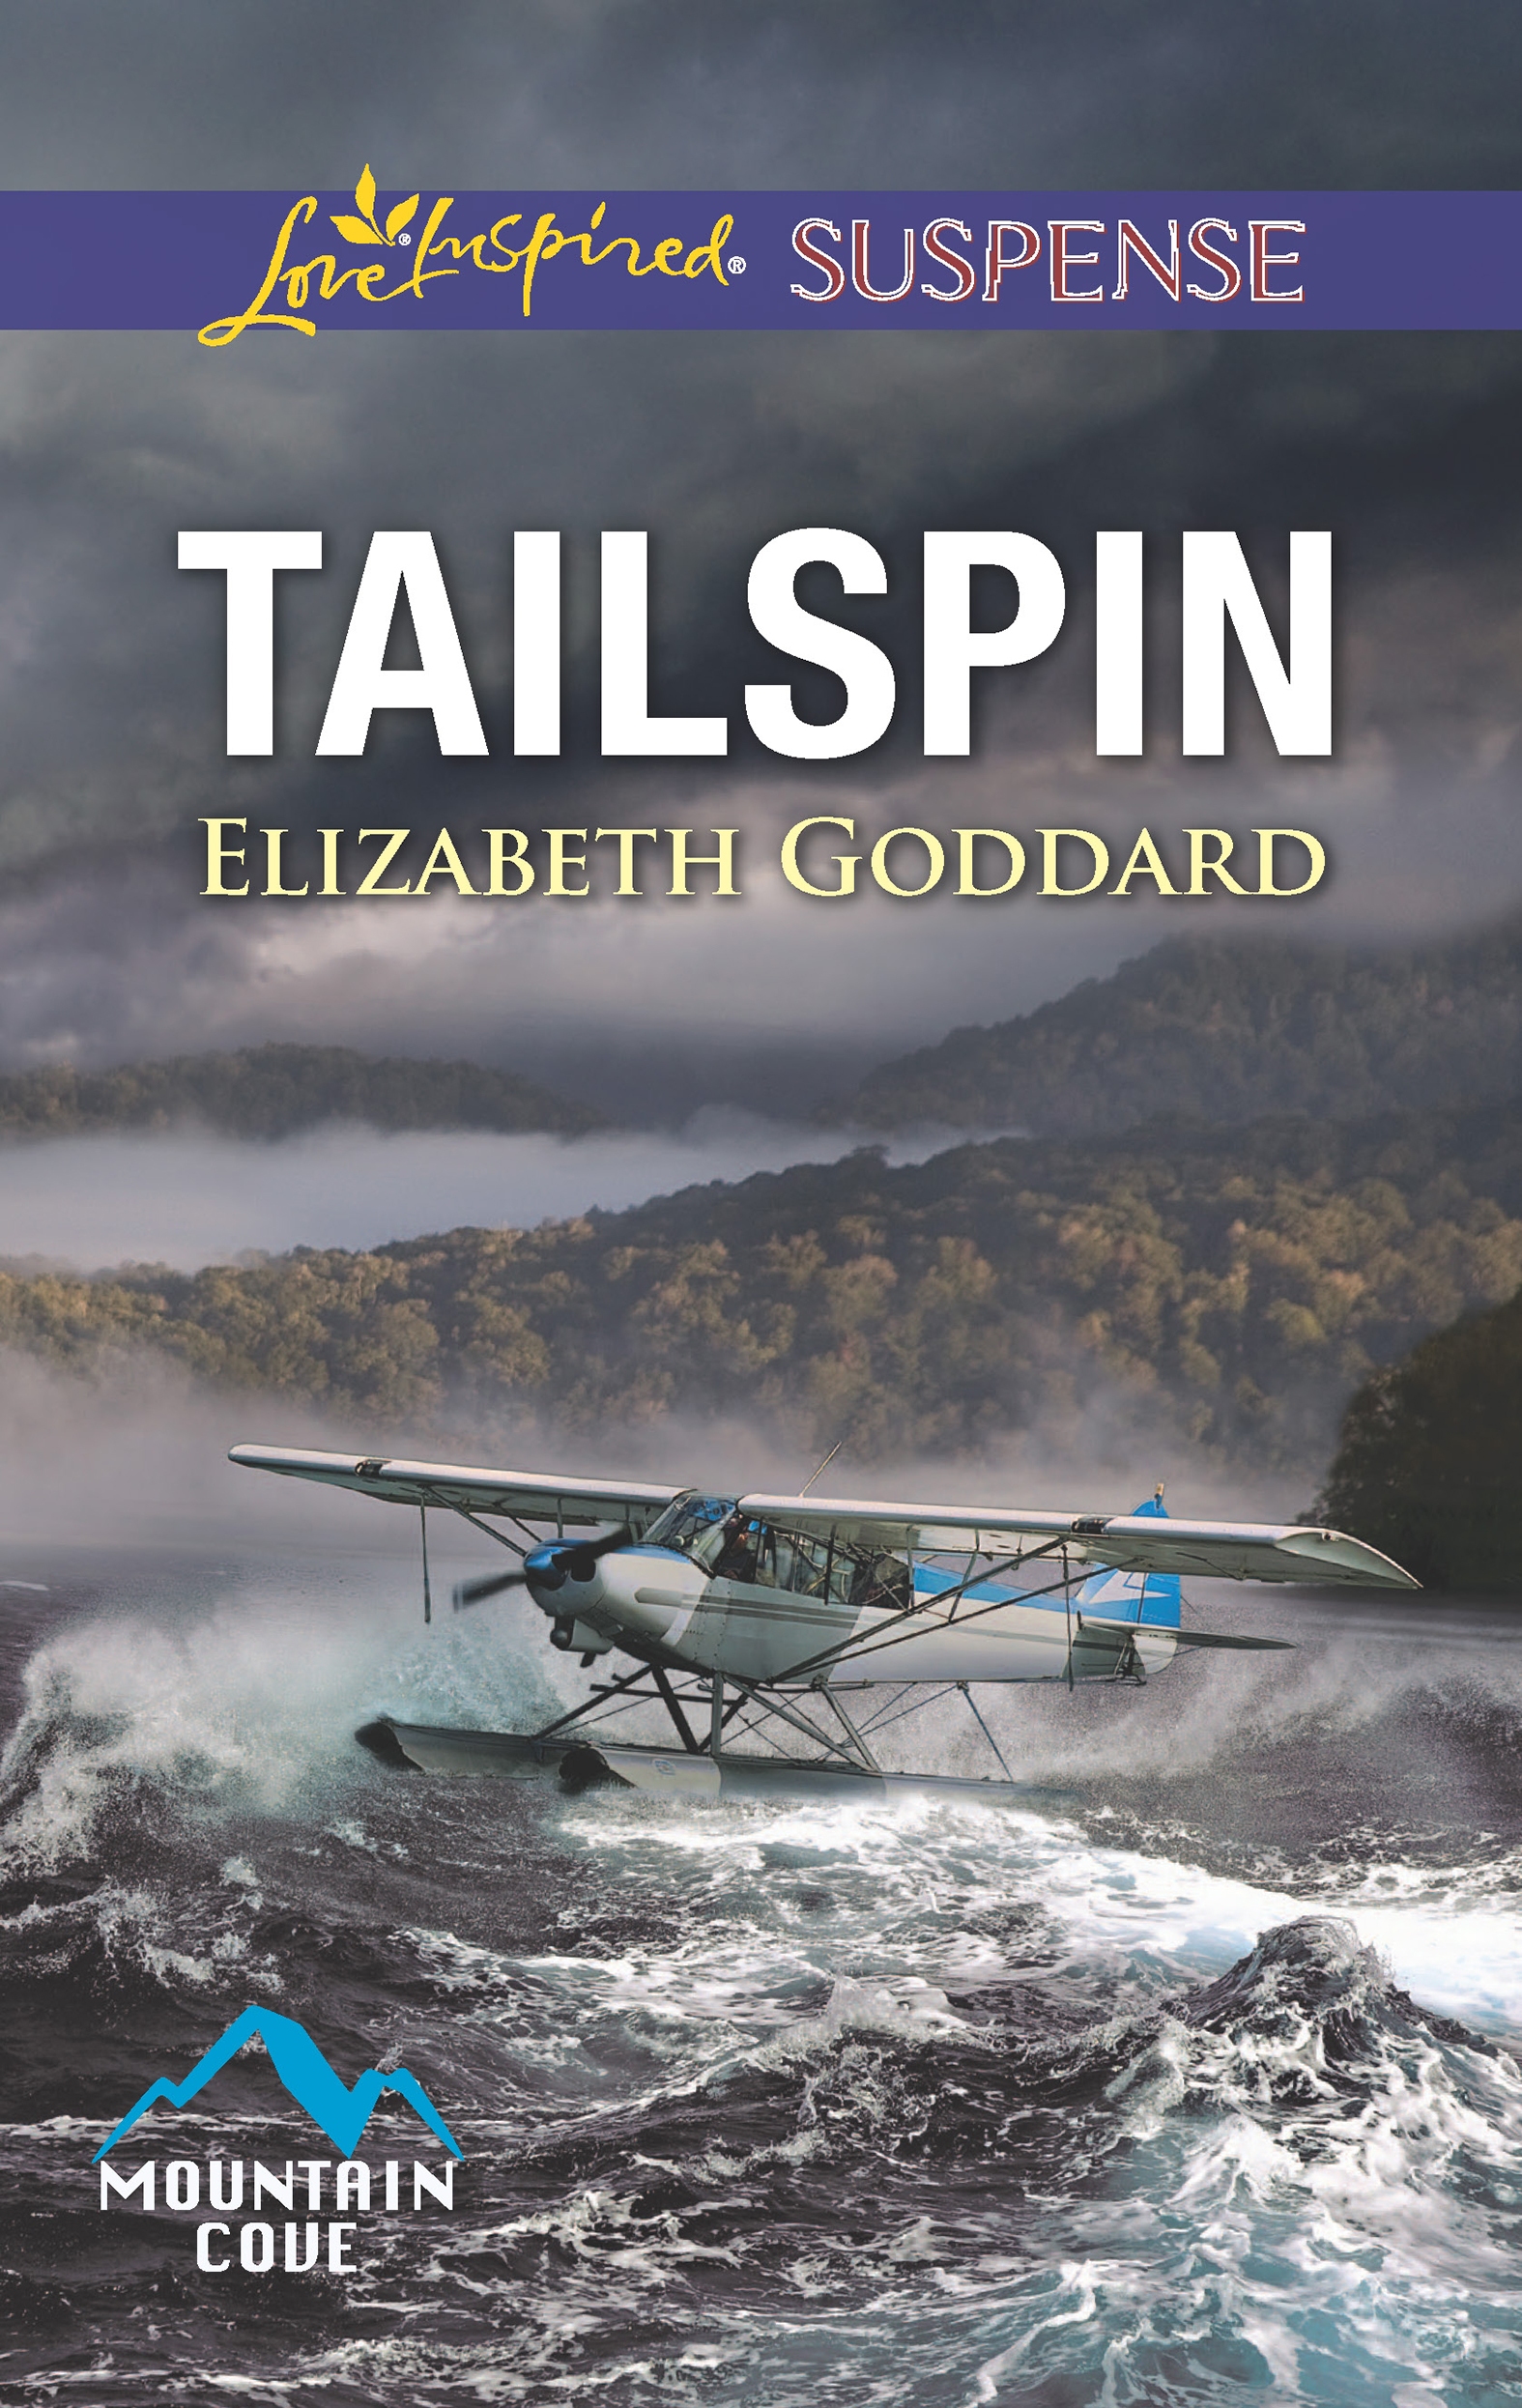 Tailspin (2016) by Elizabeth Goddard